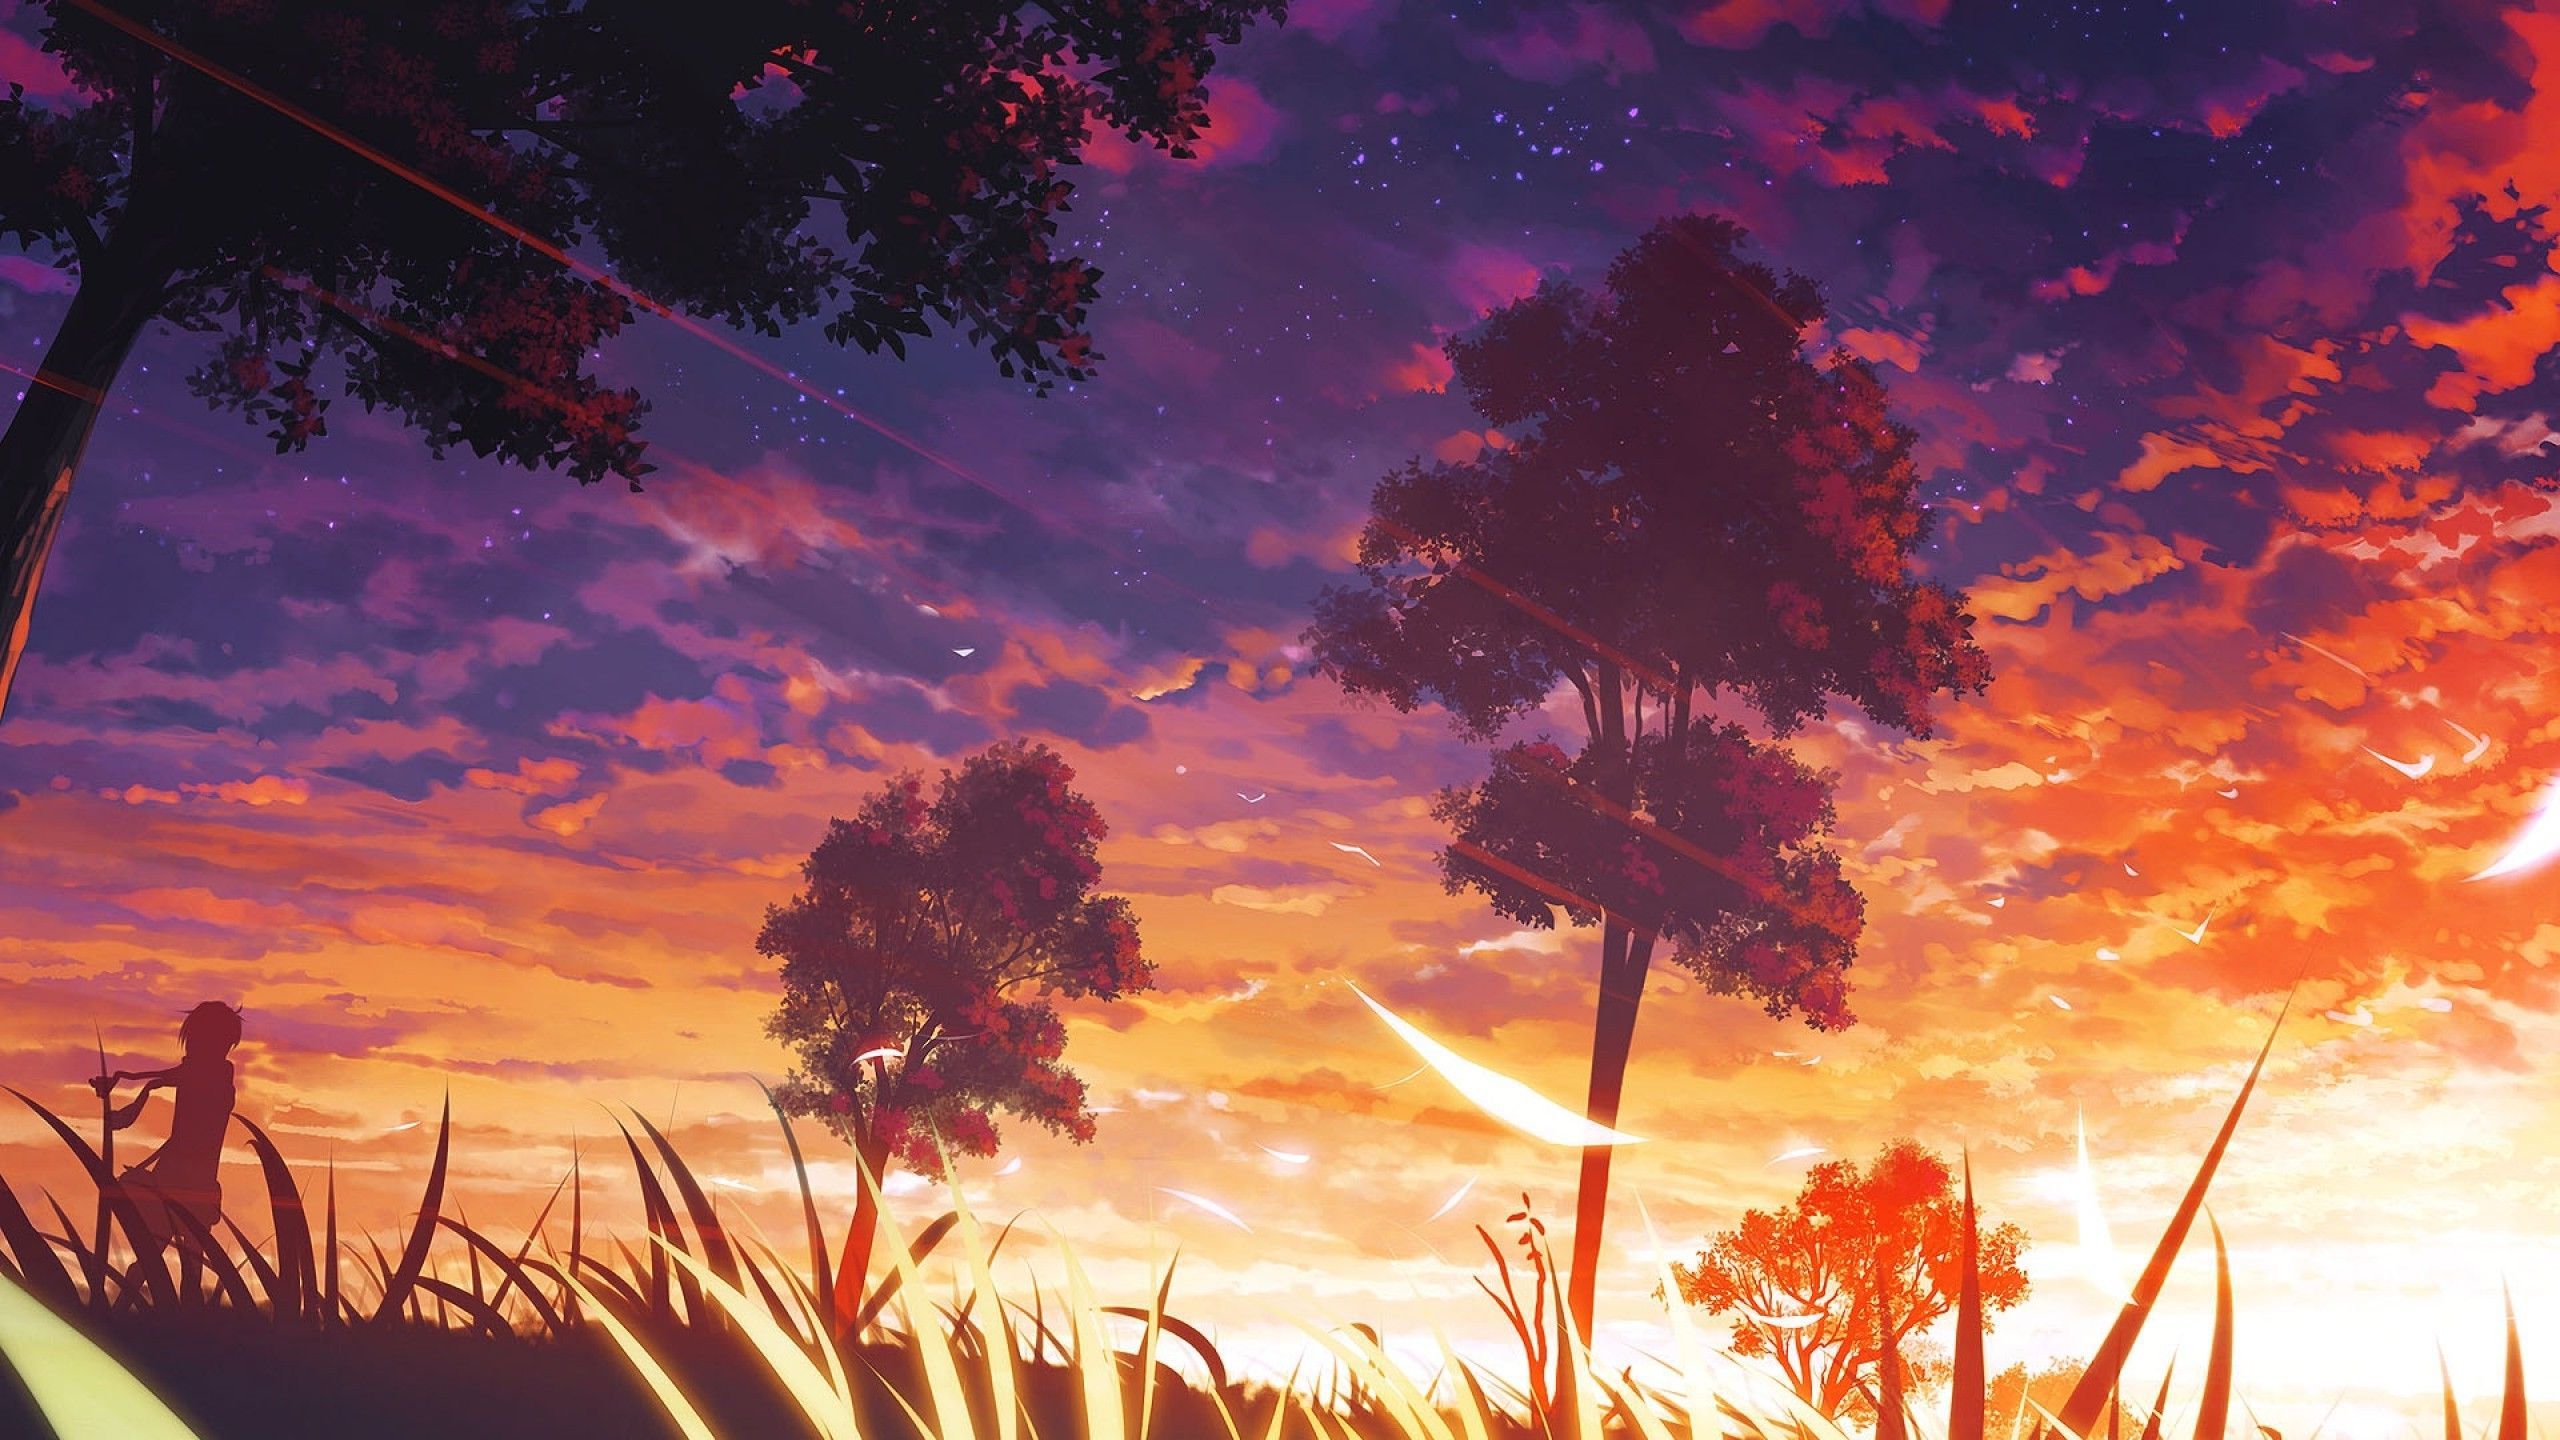 4k Anime Sunset Wallpapers Wallpaper Cave - Riset